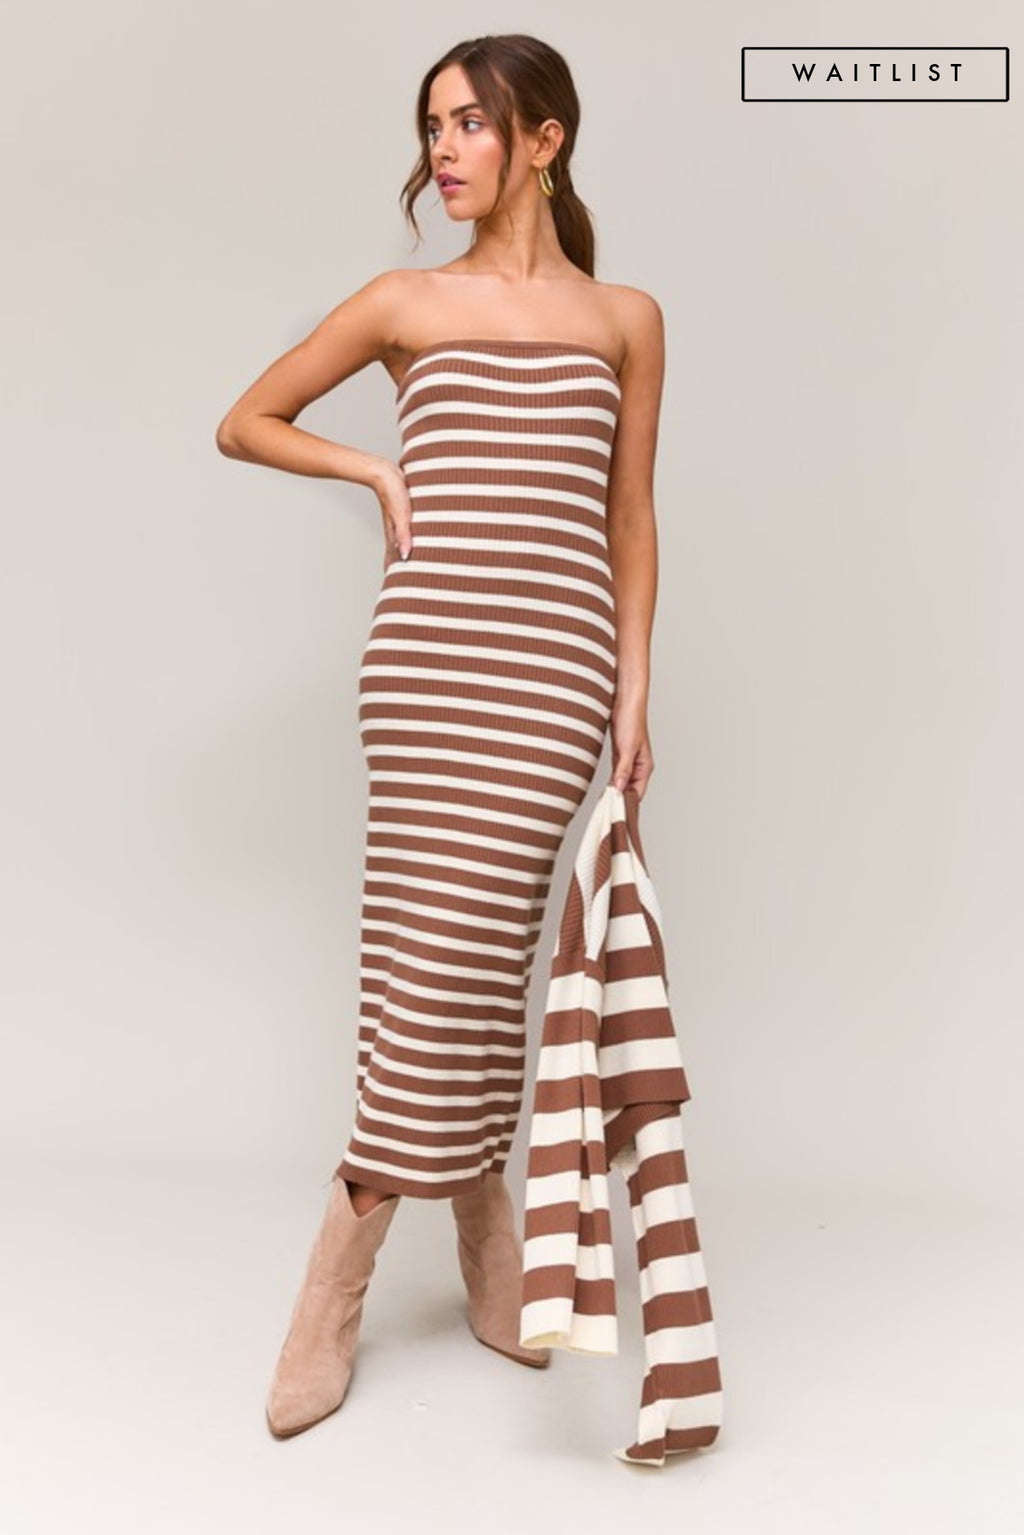  Sleeveless Stripe Print Knit Midi Dress Taupe